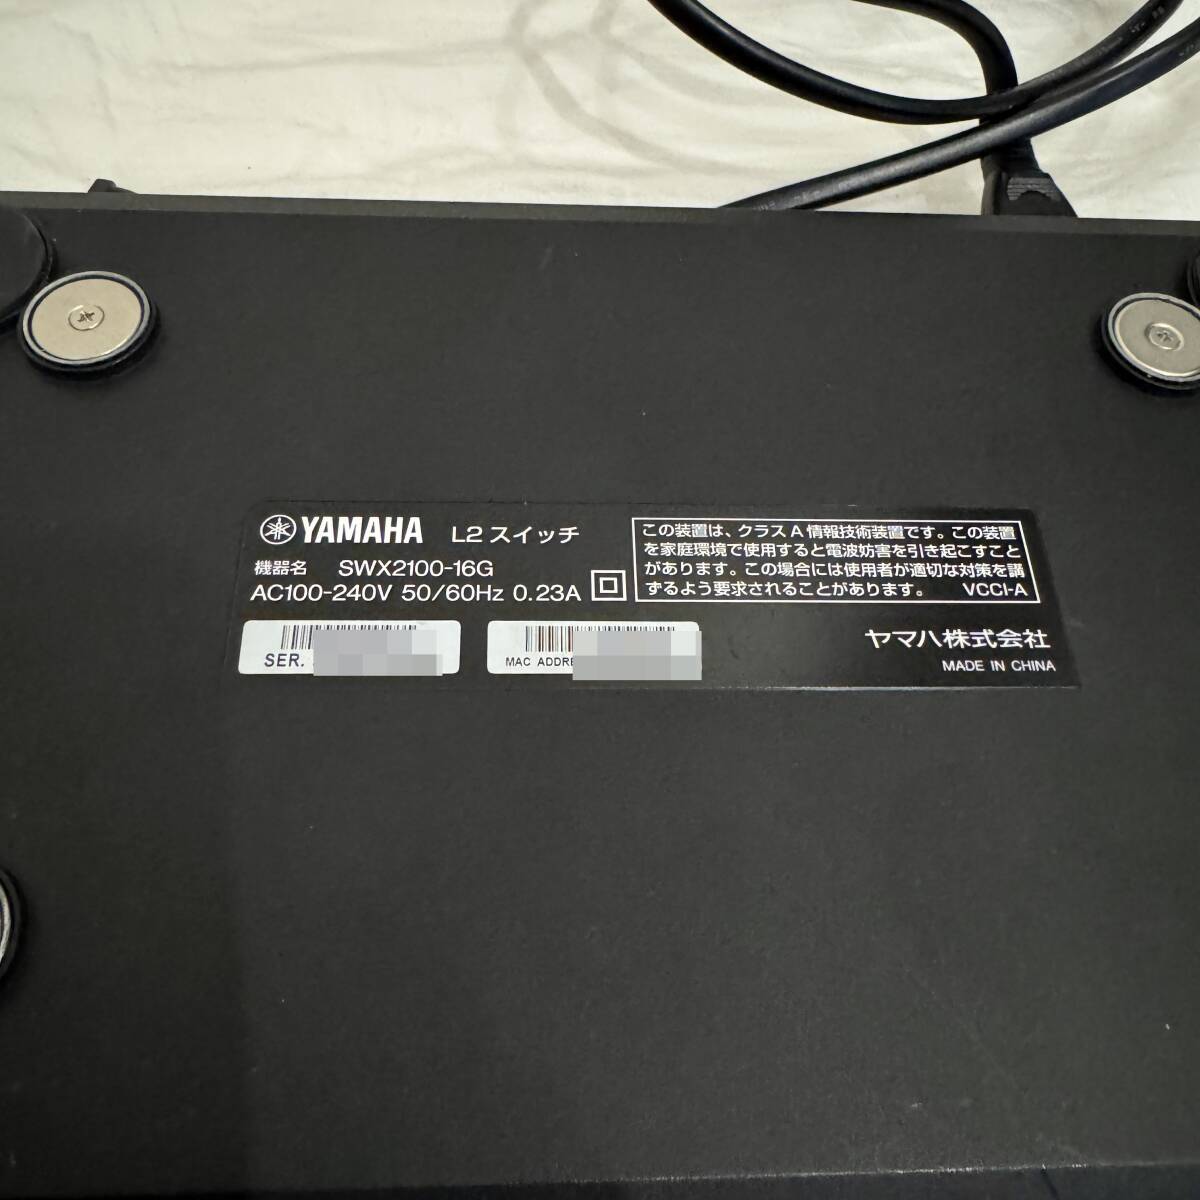  Yamaha YAMAHA simple L2 switch SWX2100-16G 16 port HUB #2